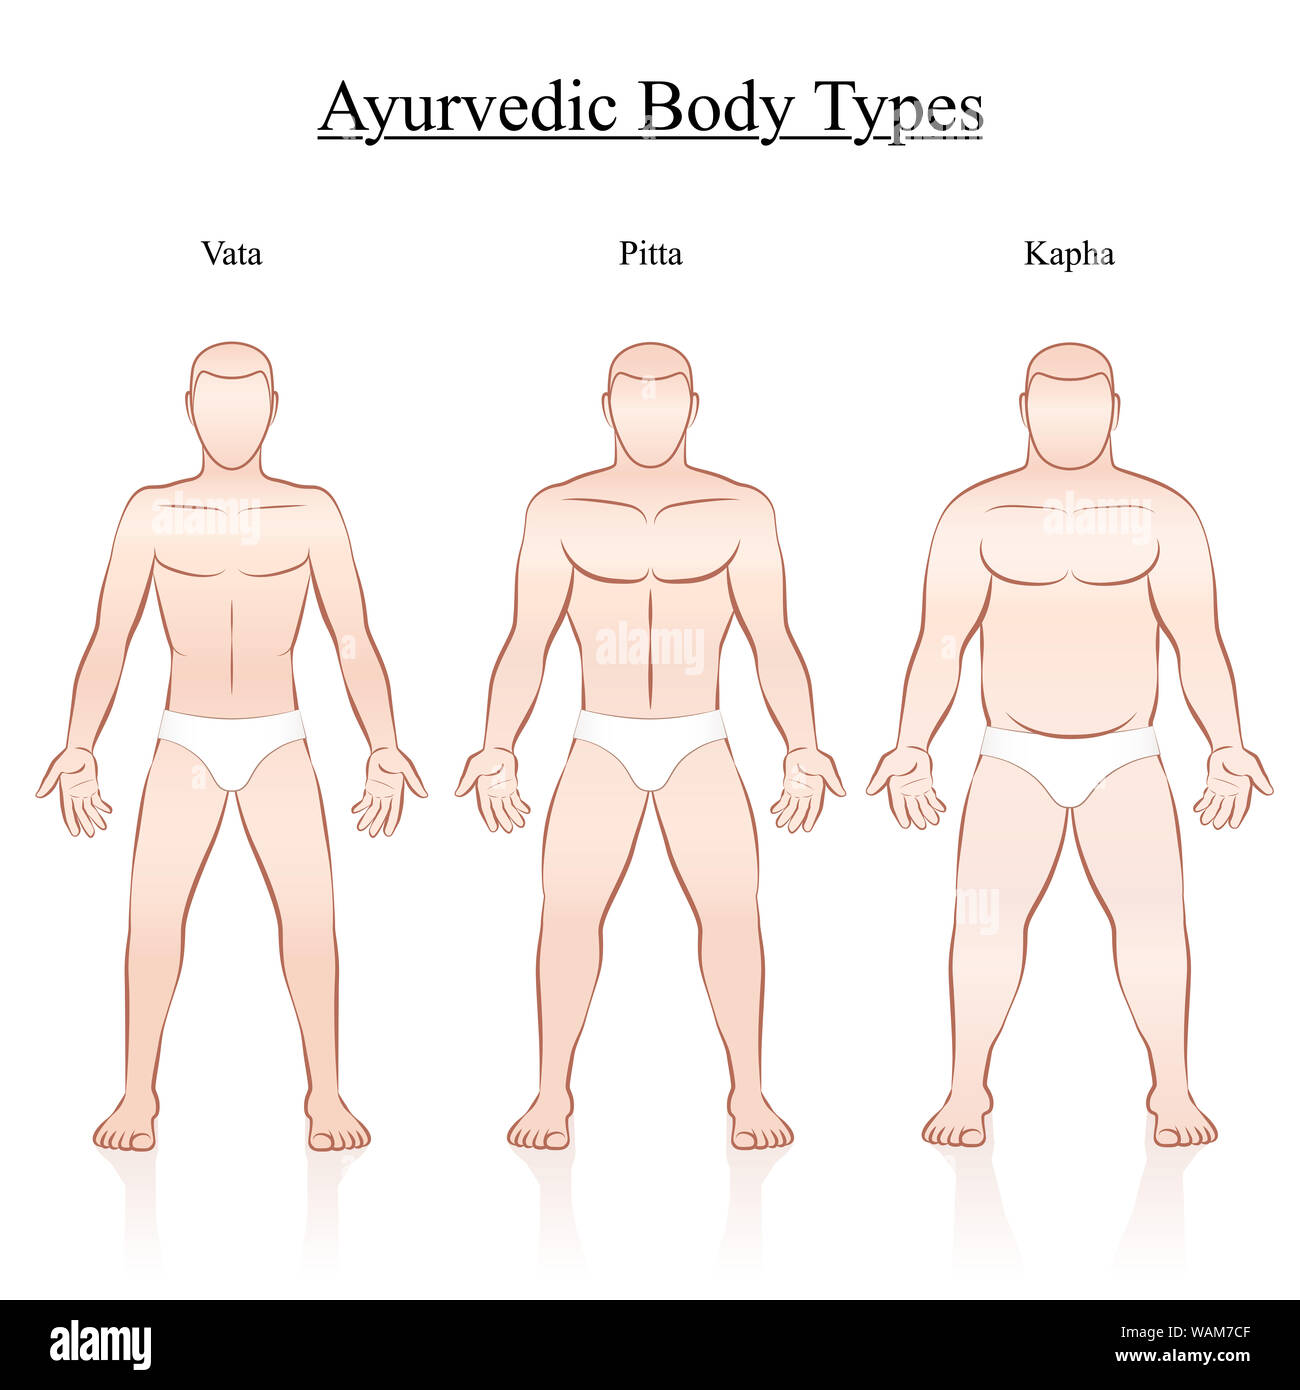 Male body constitution types - ayurvedic typology - vata, pitta, kapha -  outline illustration of men - frontal view - different anatomy Stock Photo  - Alamy